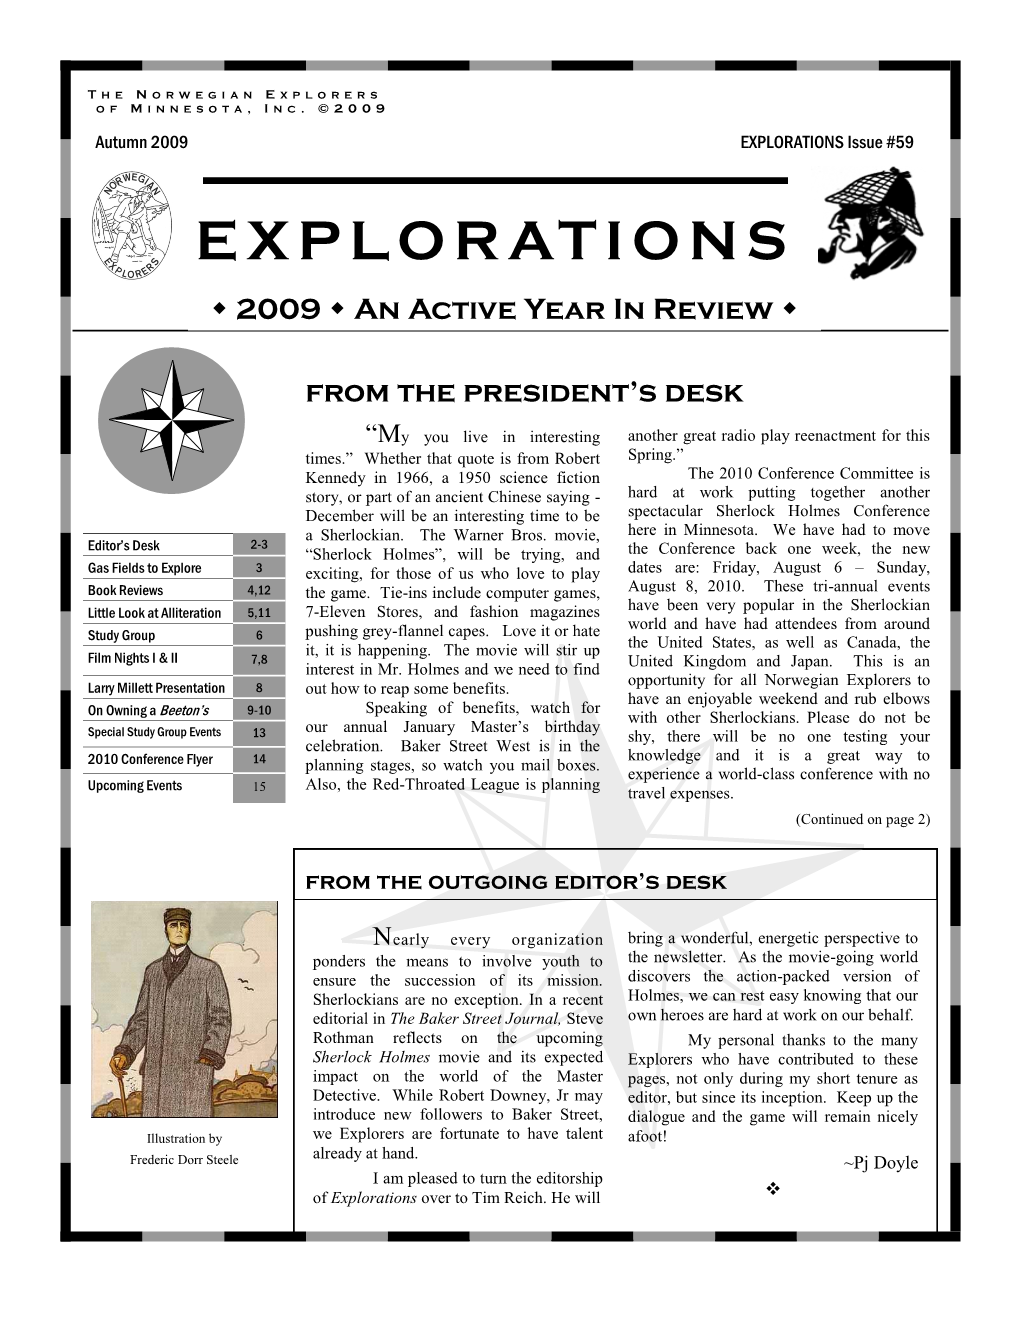 EXPLORATIONS Issue #59 EXPLORATIONS